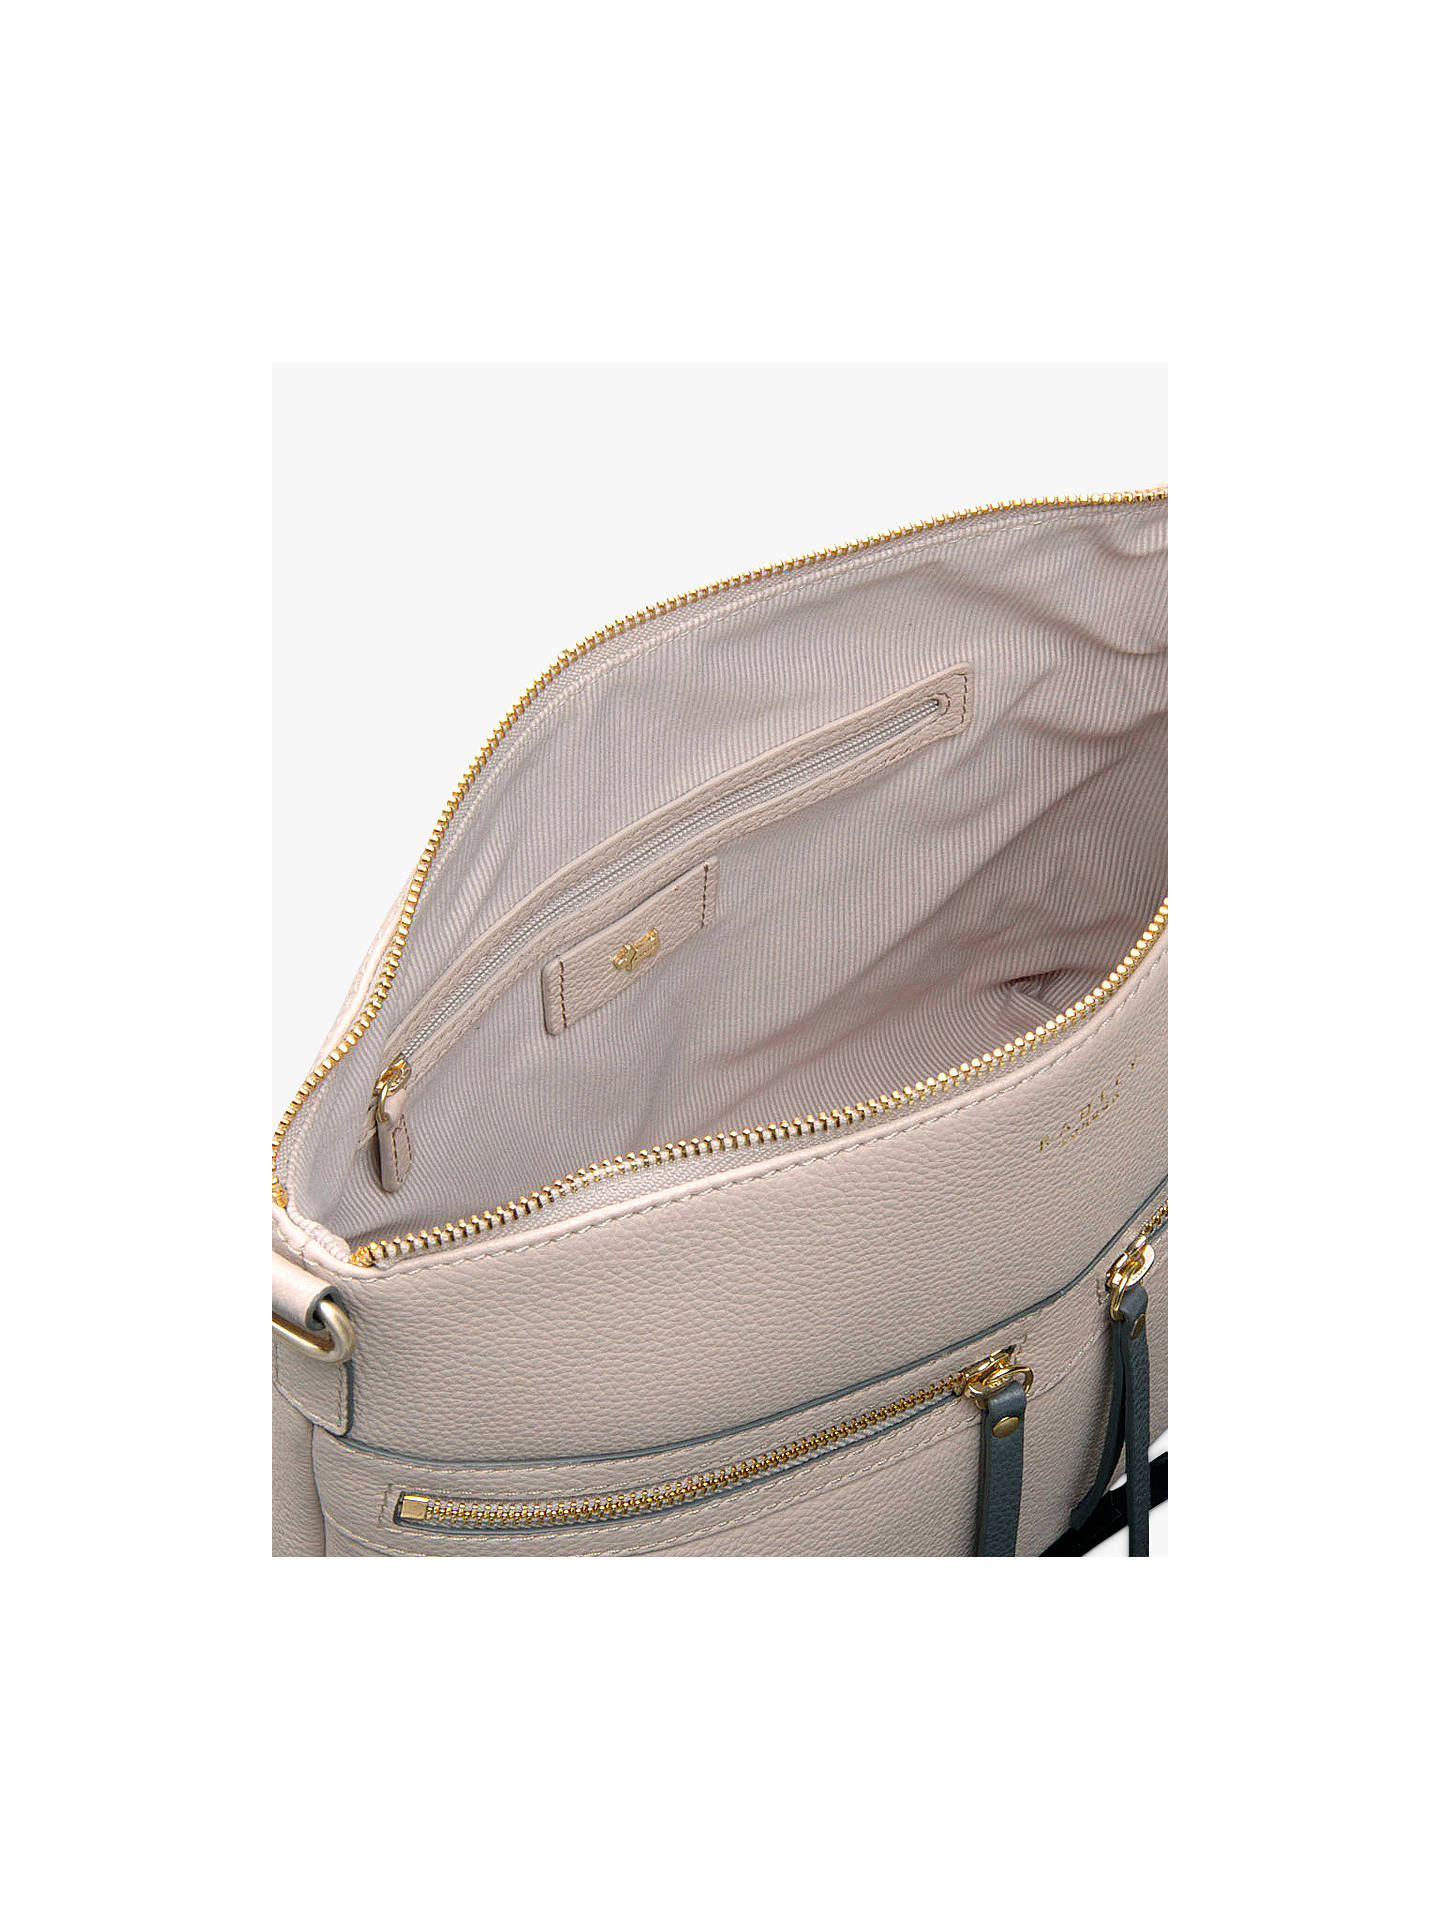 Radley Smith Street Leather Medium Shoulder Bag, Dove Grey at John Lewis & Partners